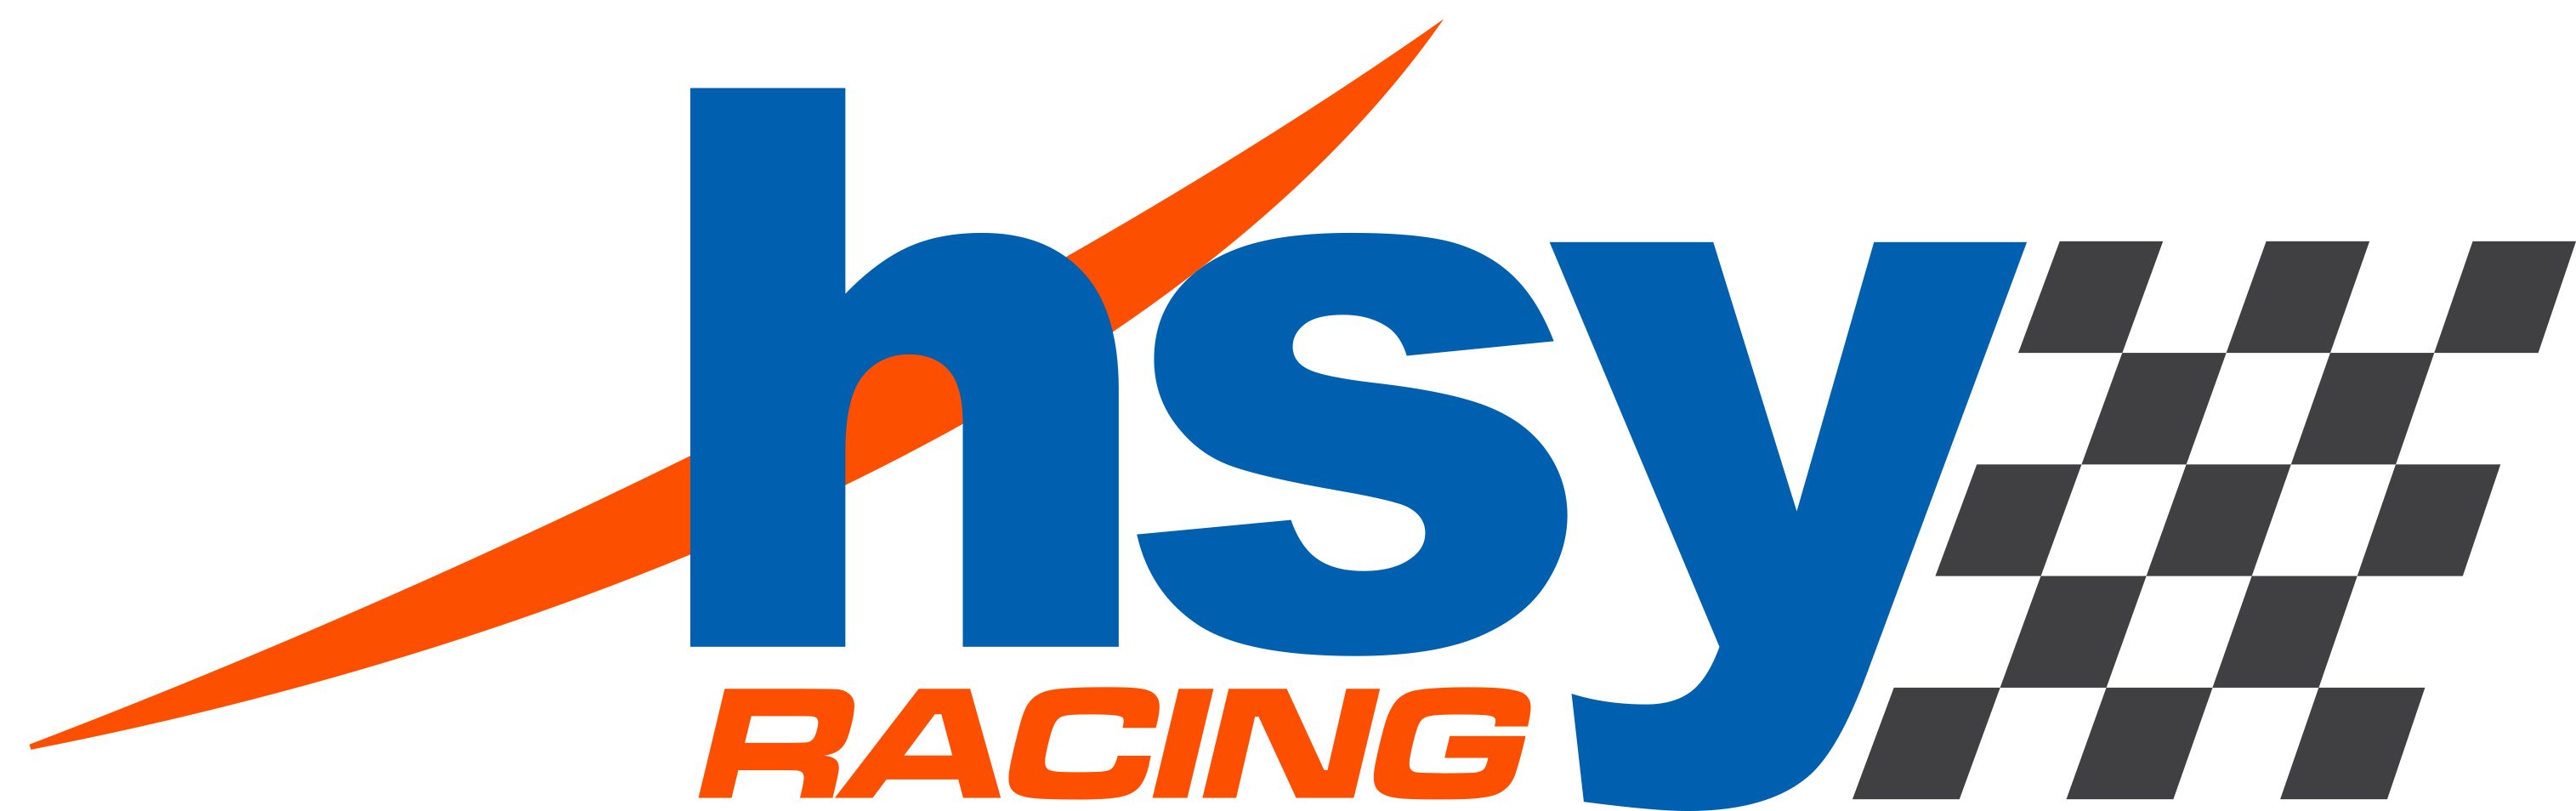 hsy racing 2018